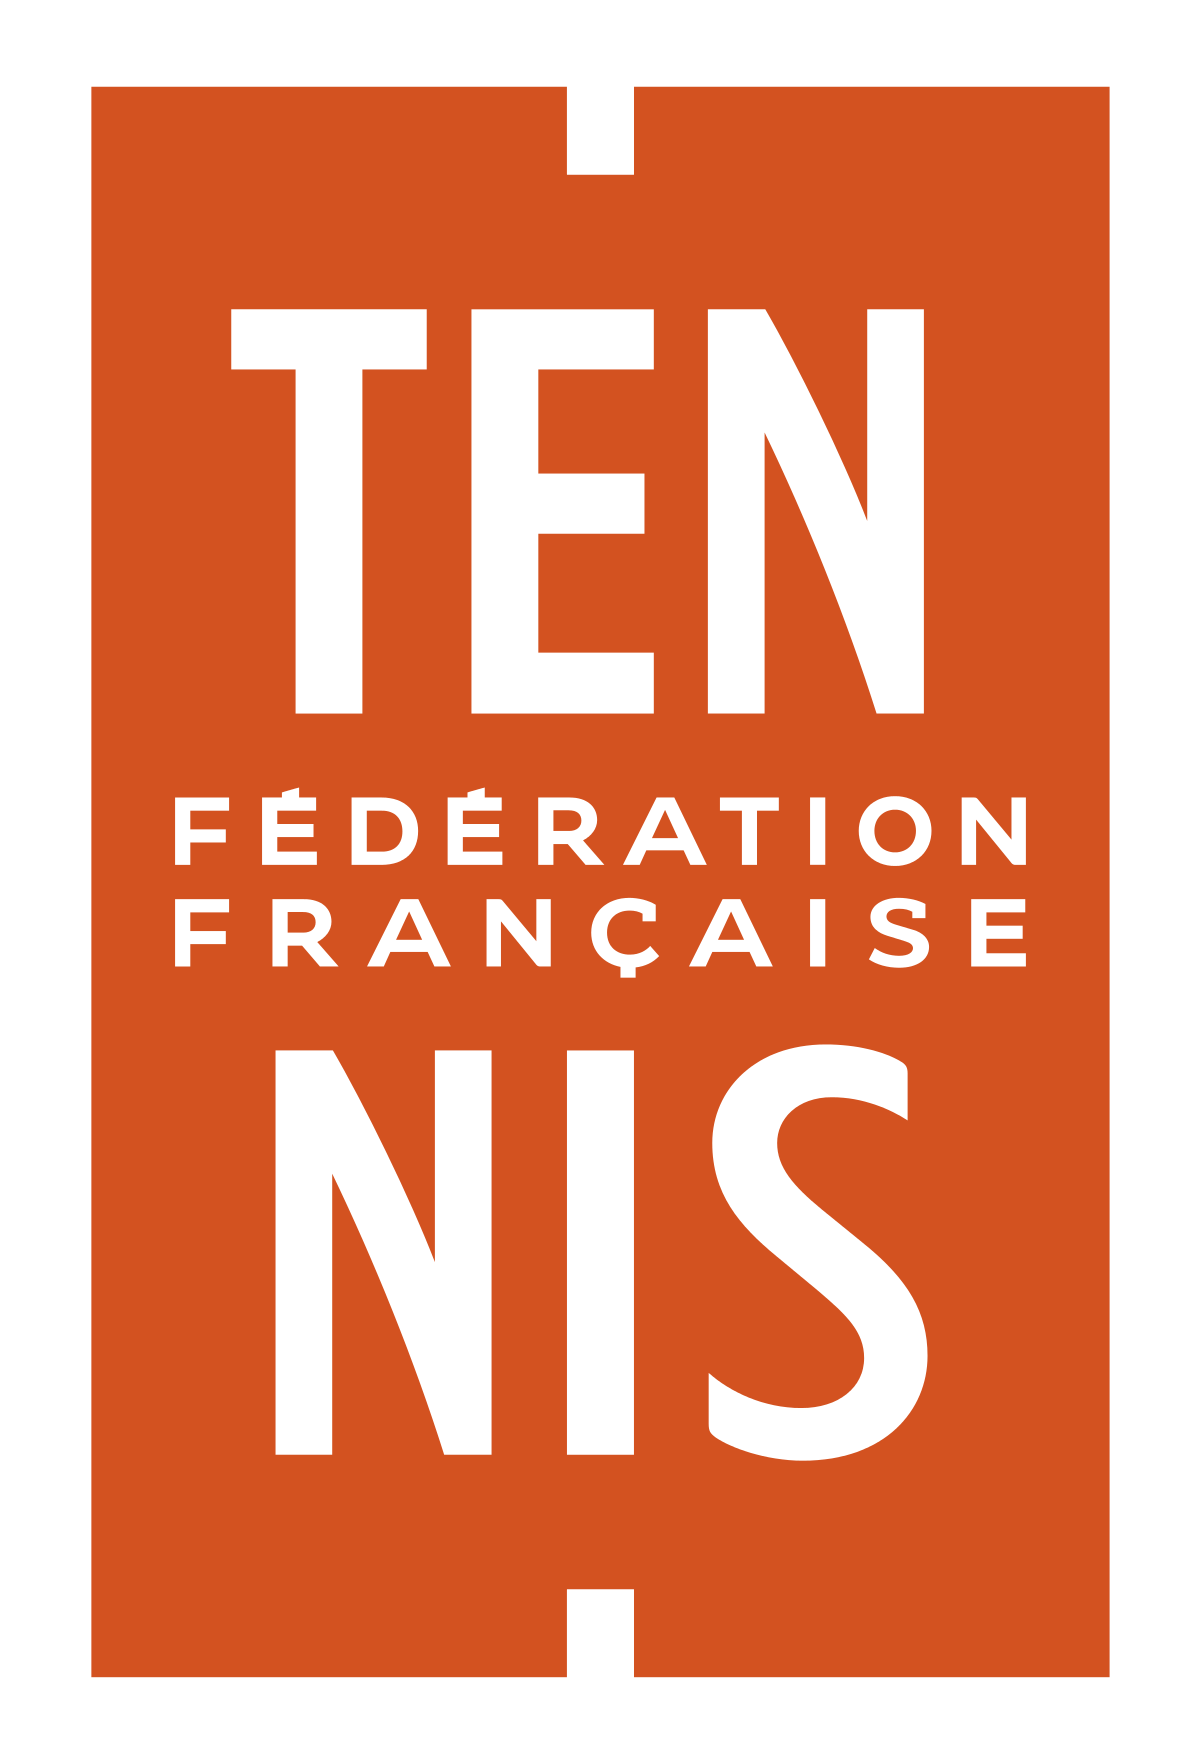 logo ff tennis